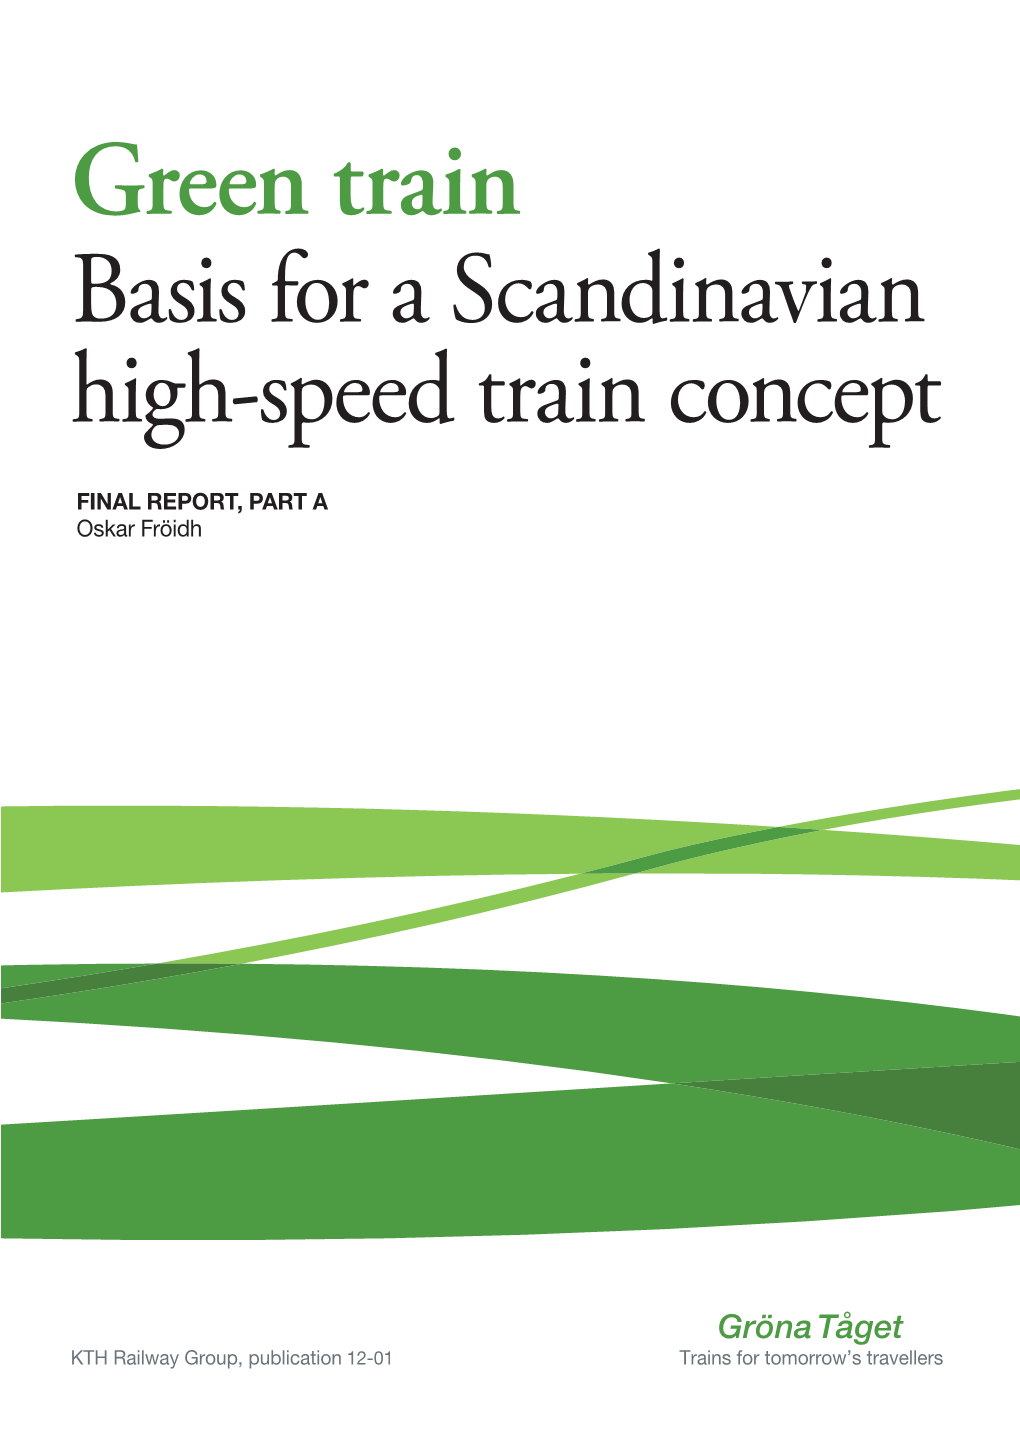 Green Train Basis for a Scandinavian High-Speed Train Concept